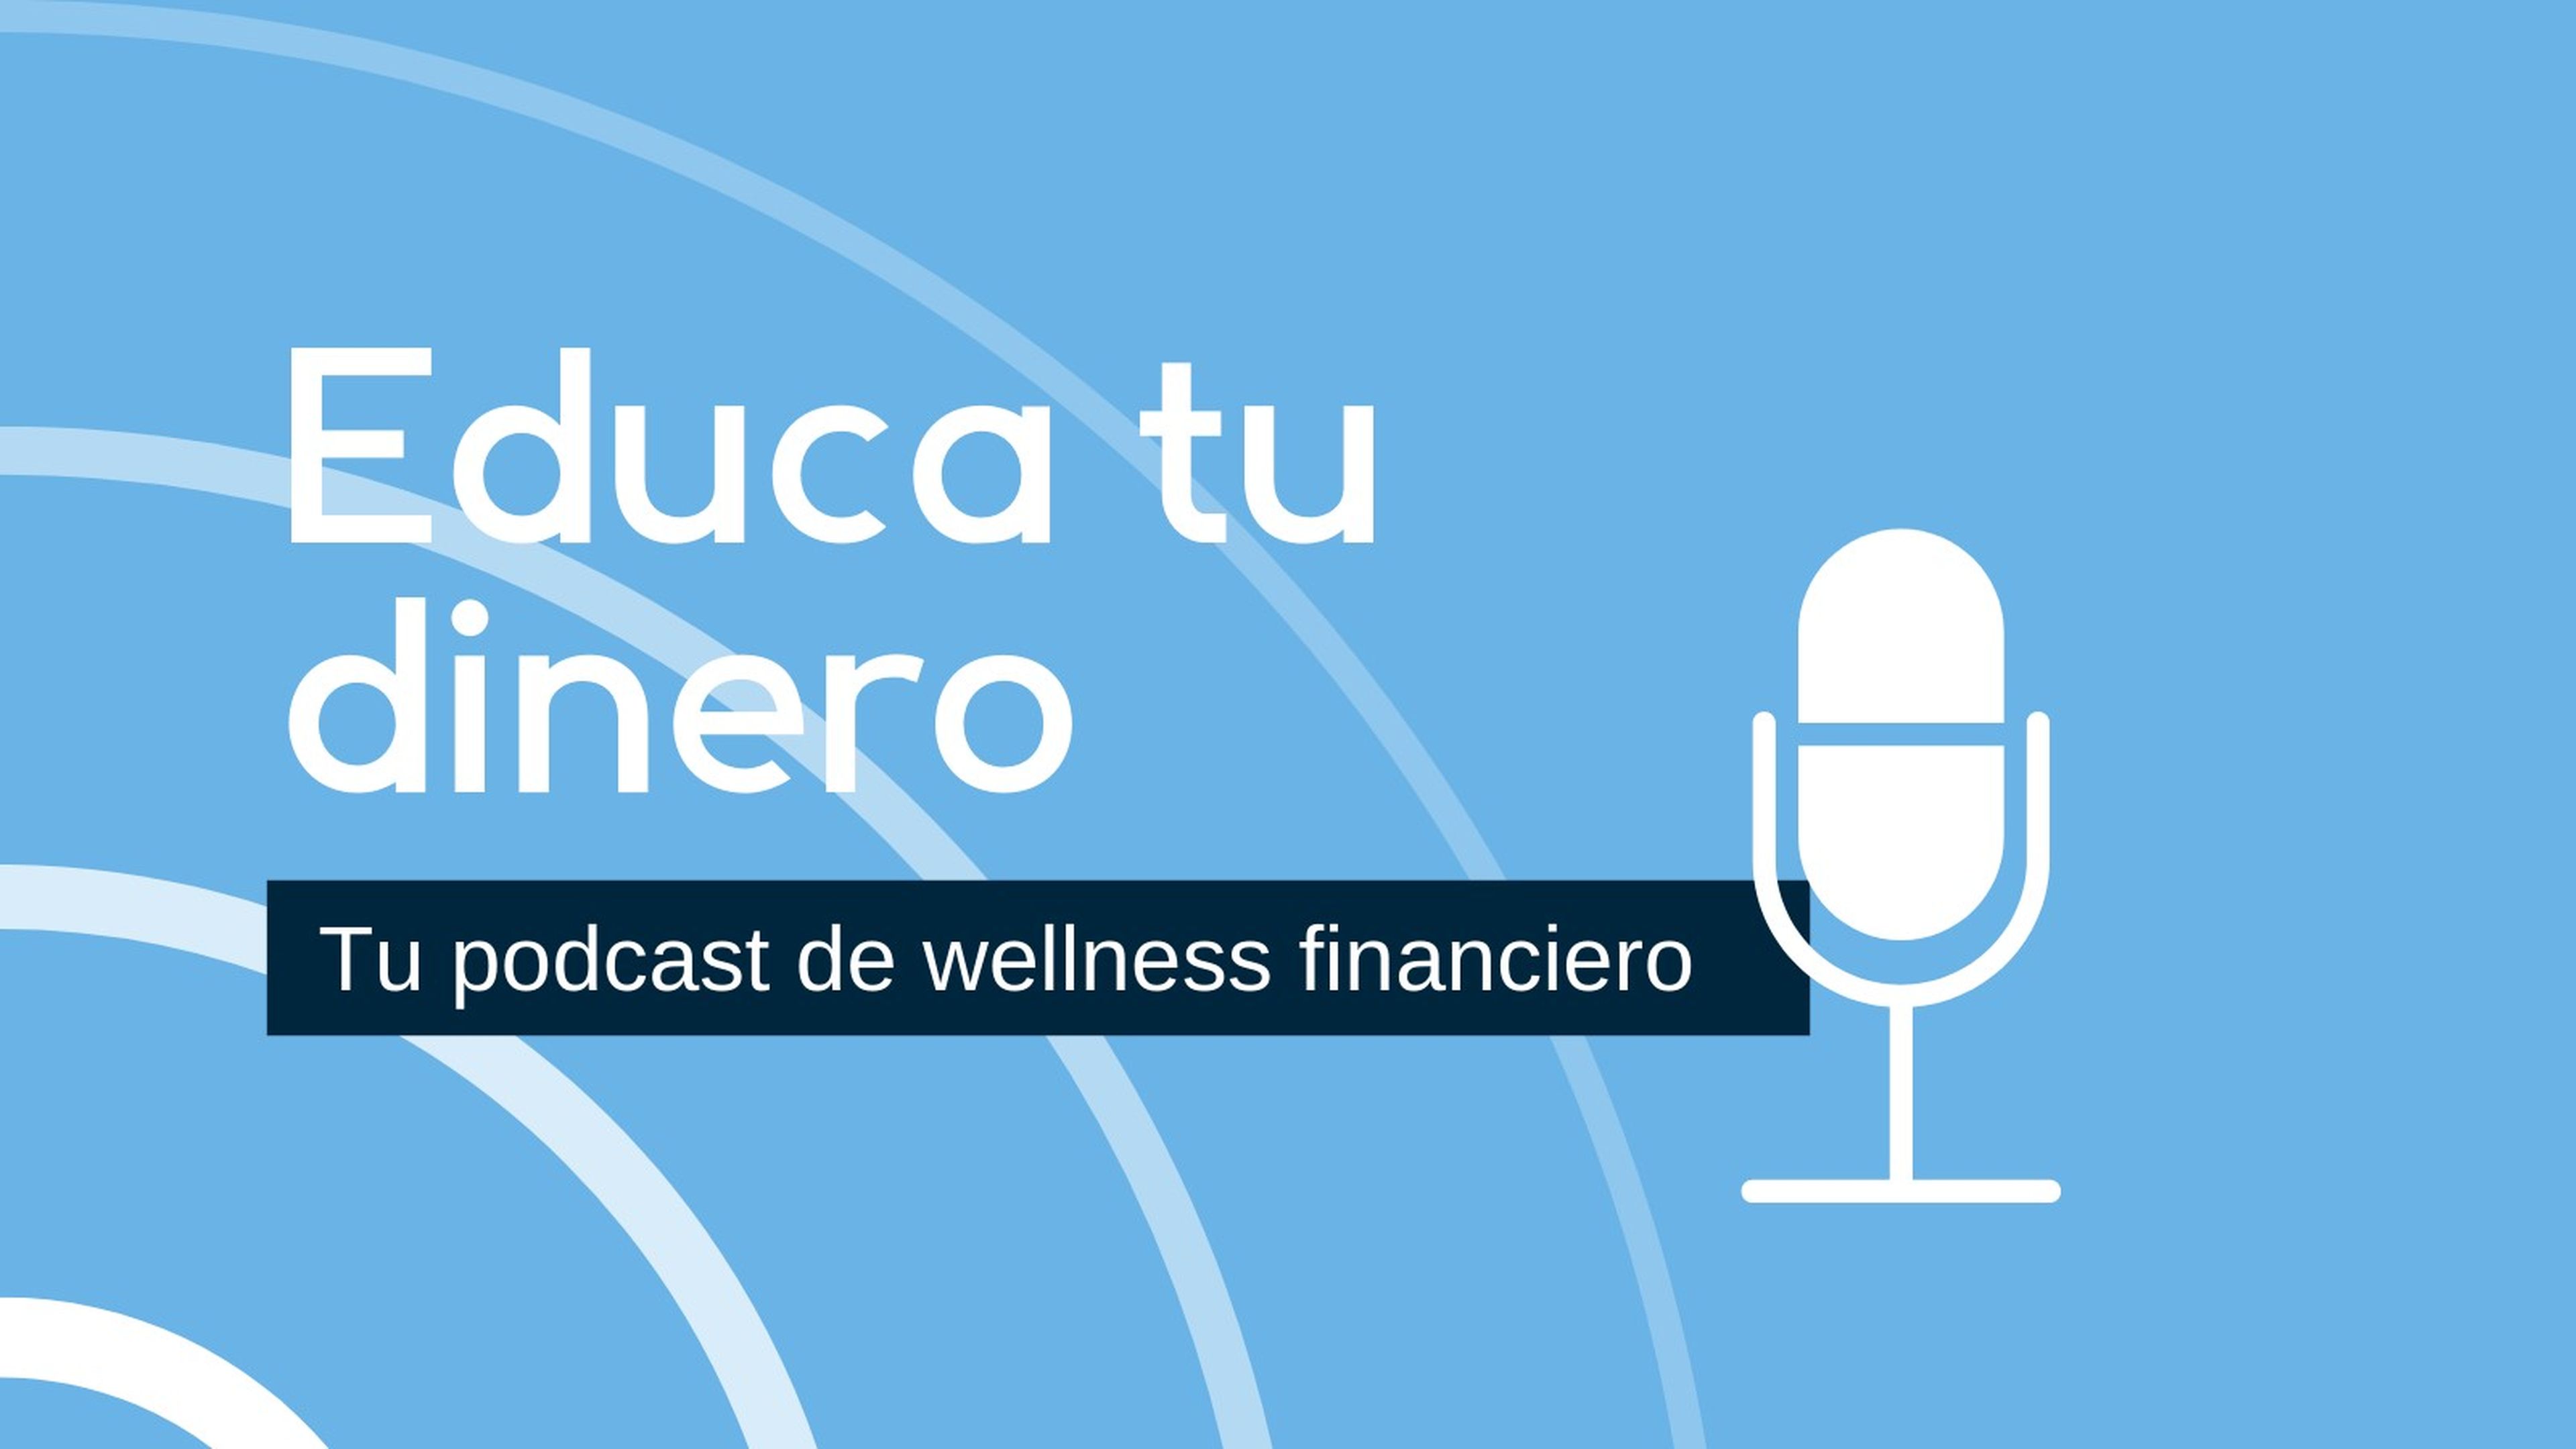 Educa tu dinero, tu podcast de wellness financiero.